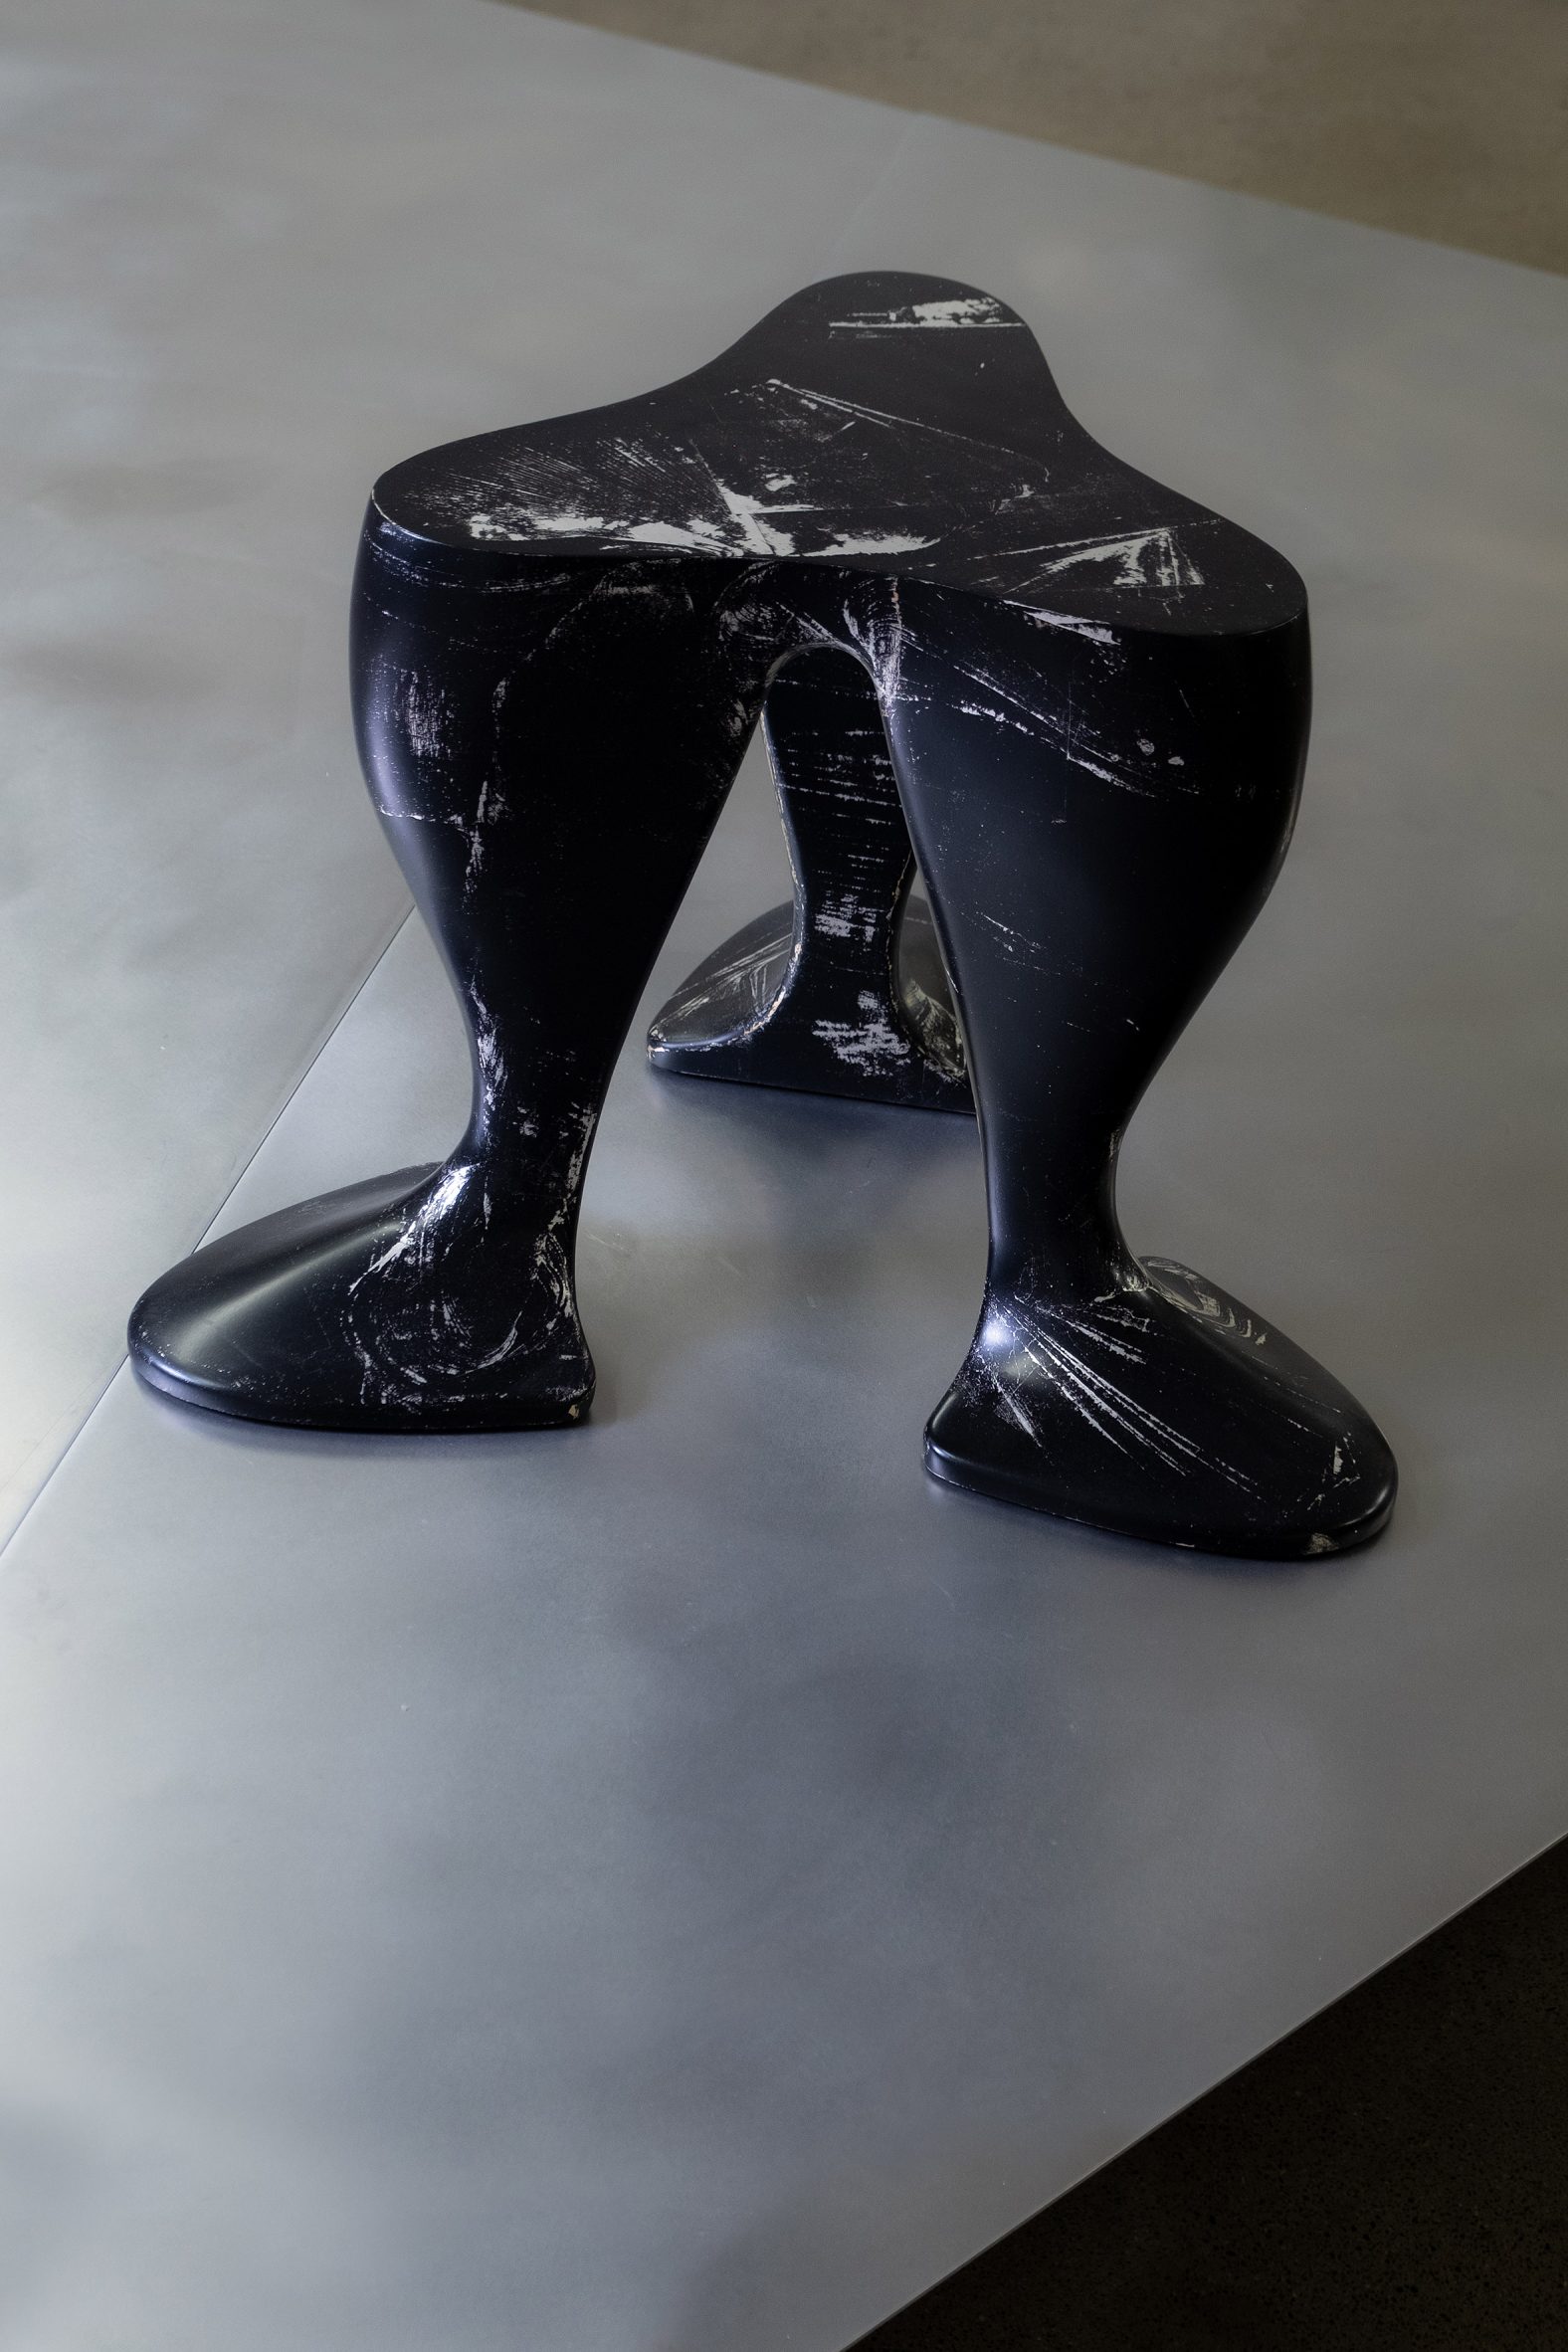 stool by Caleb Ferris